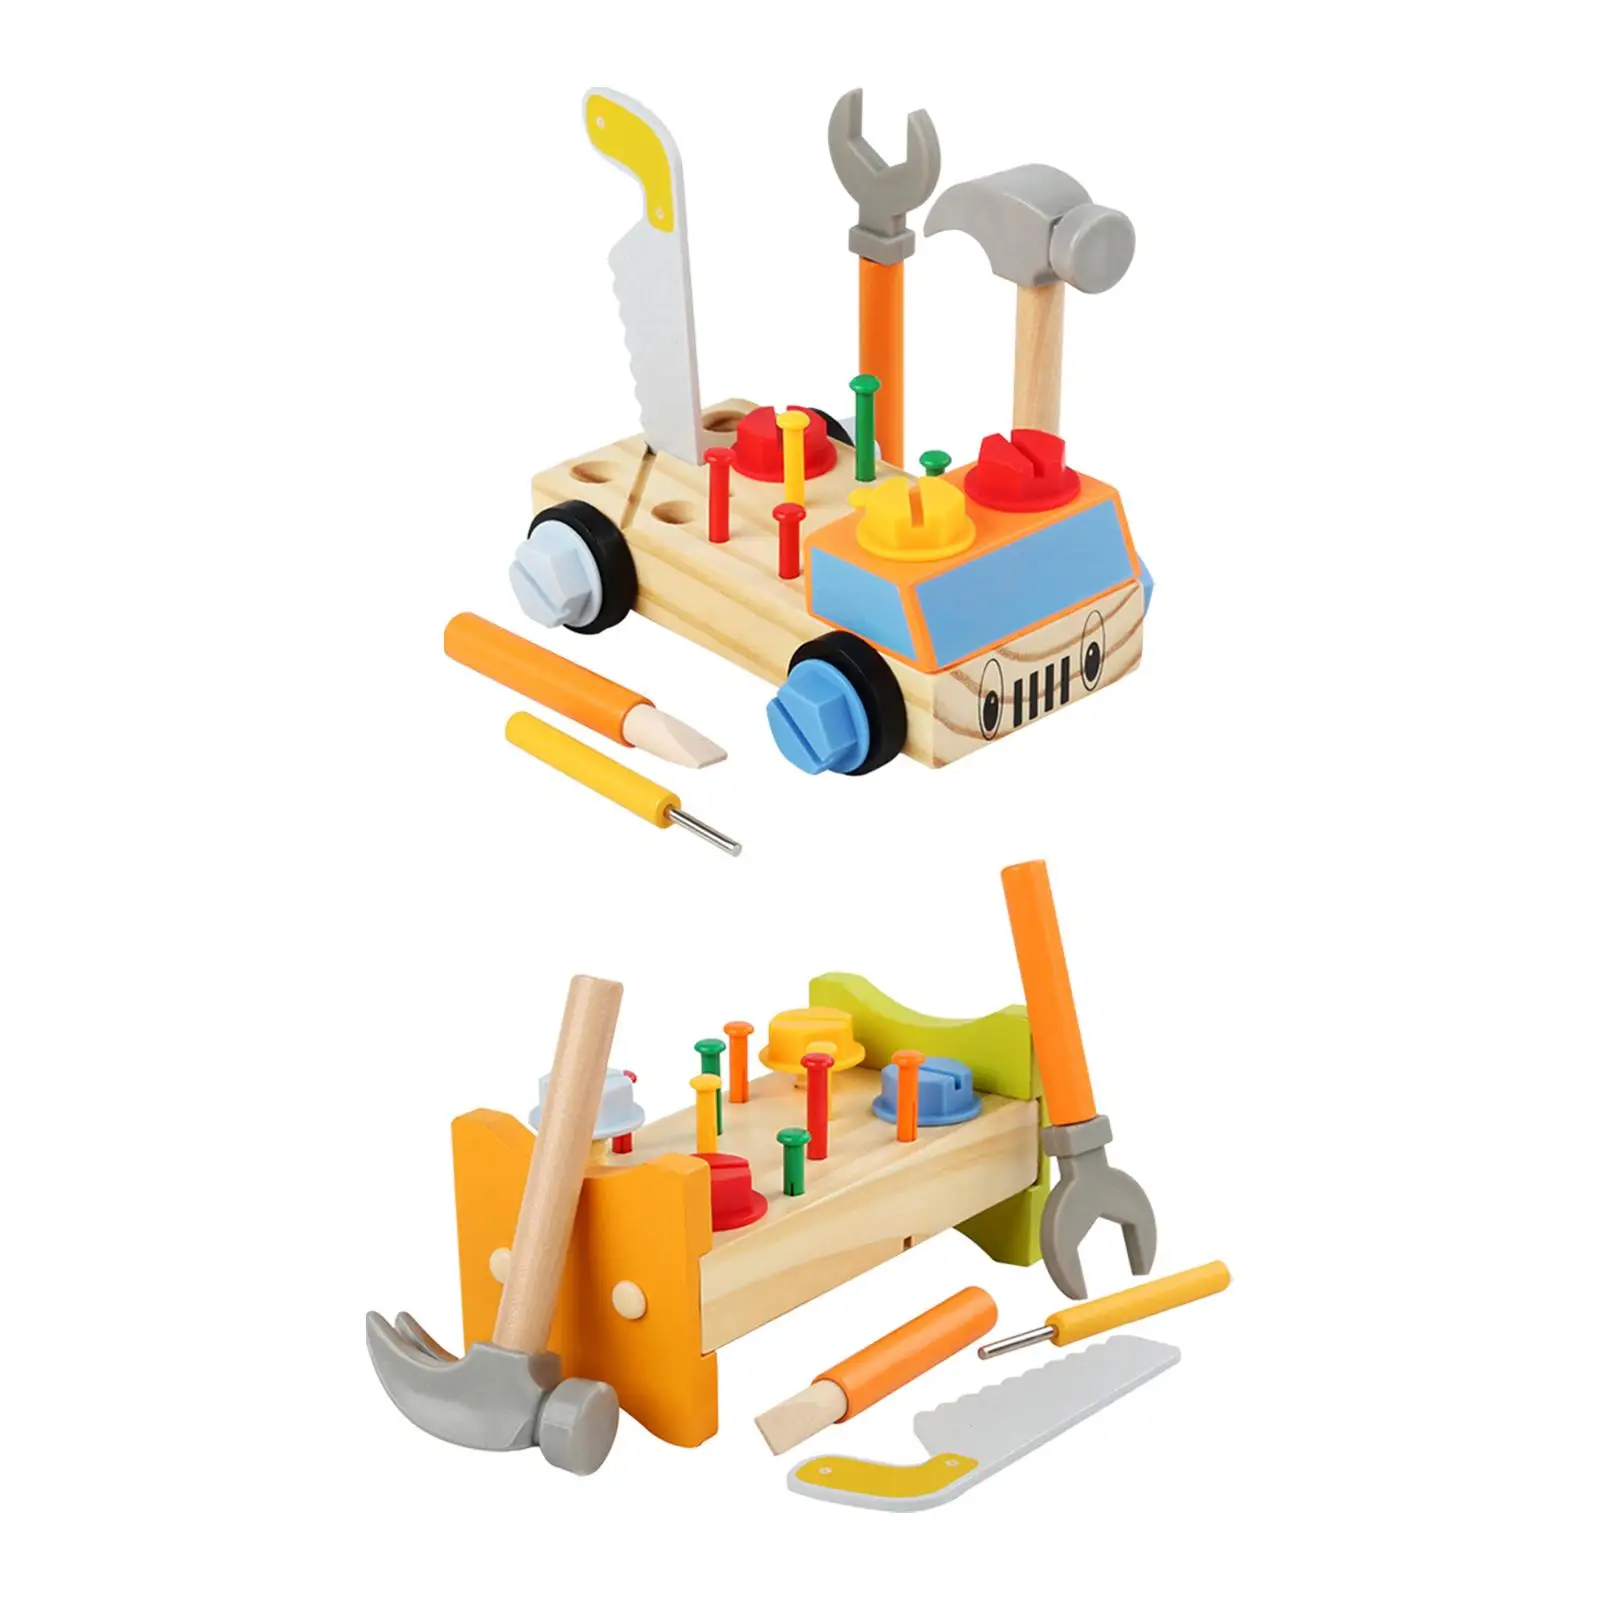 Children`s Construction Tool Workbench Motor Skills for Preschool Ages 3+